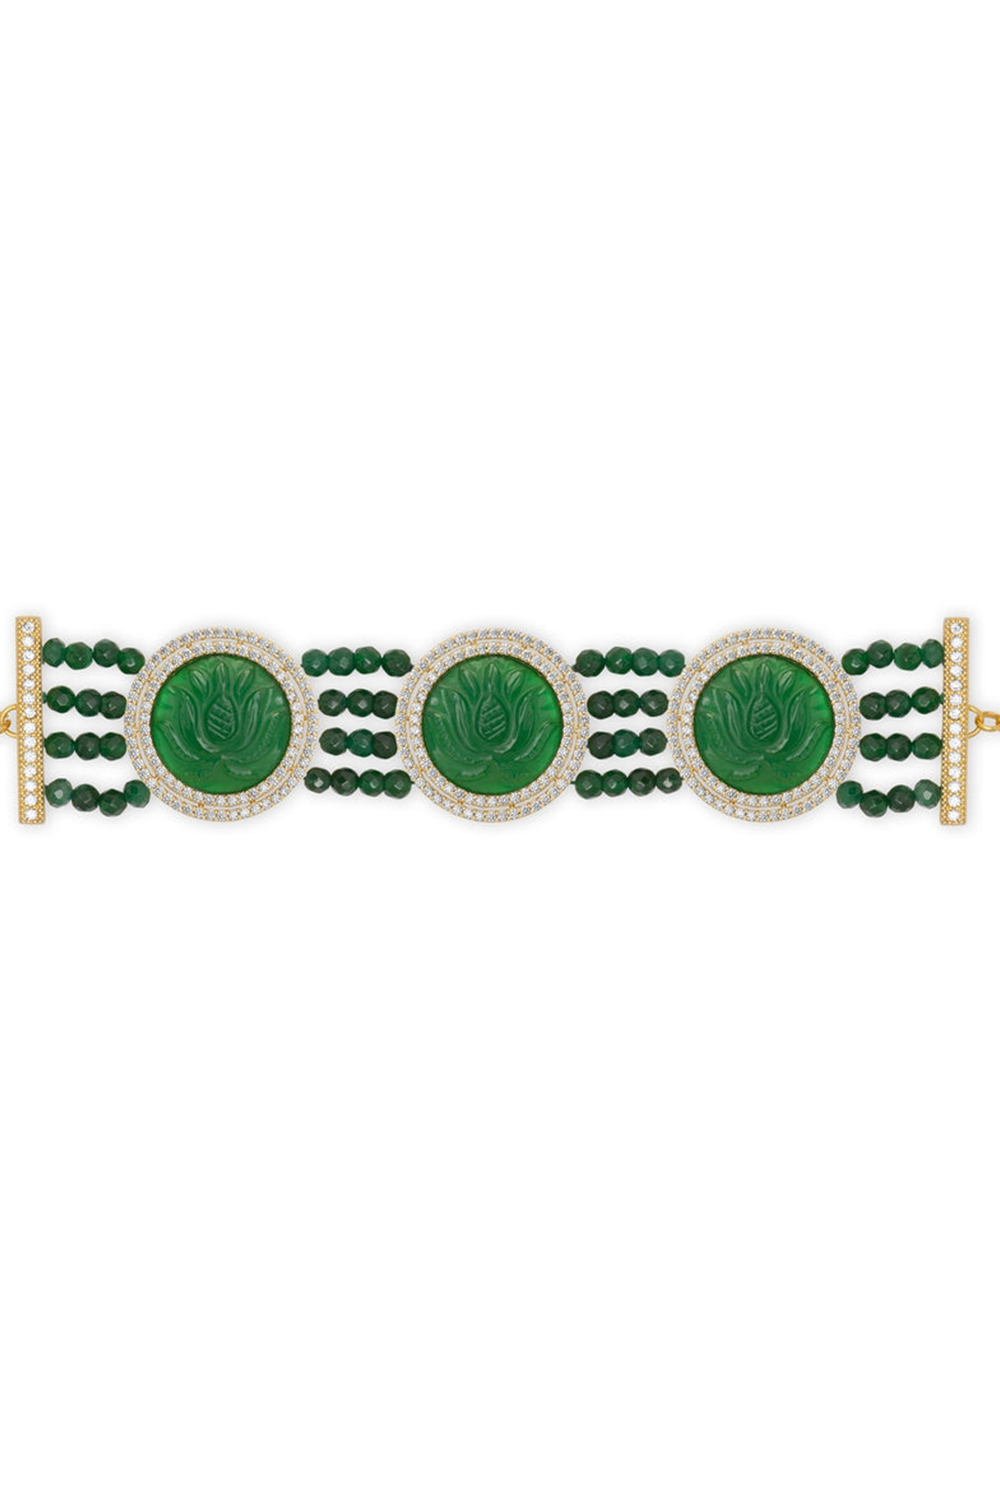 Royal Lotus Emerald Bracelet